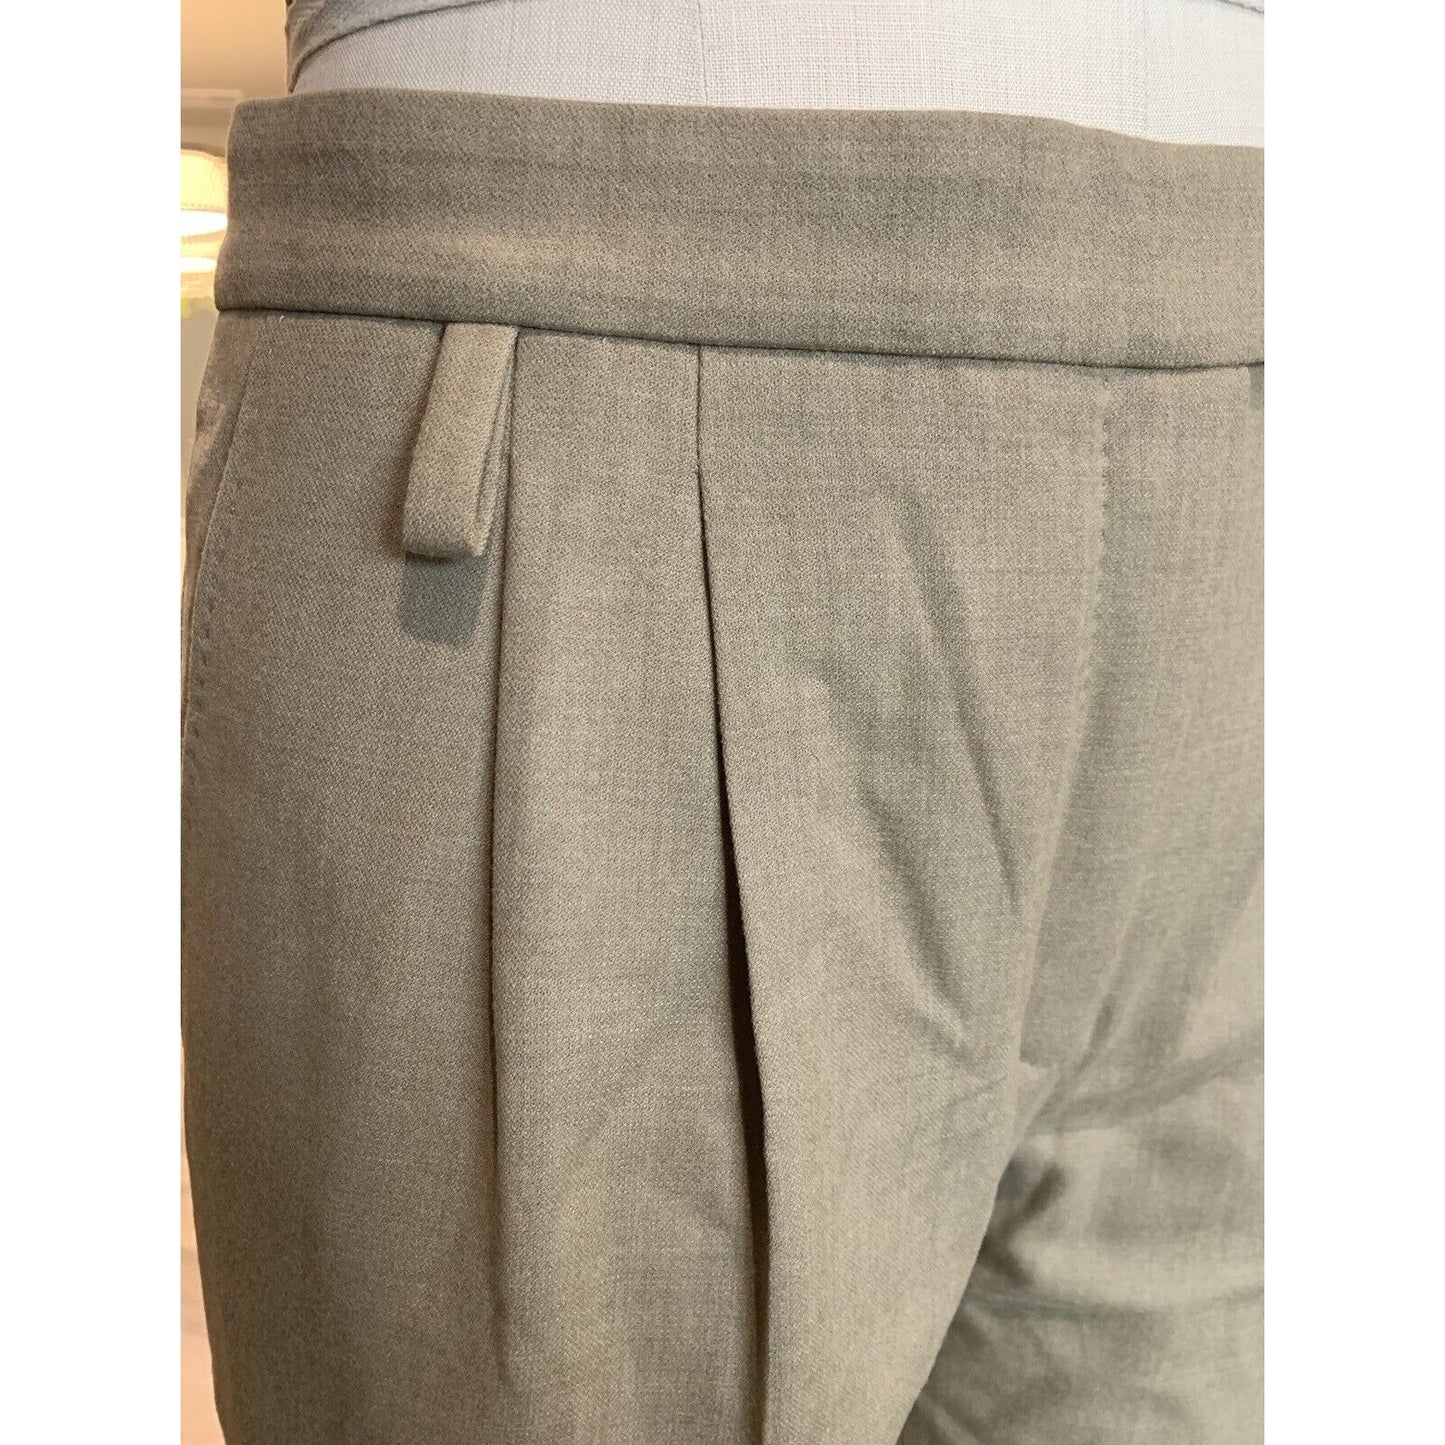 Hermes Women's 100% Soft Virgin Wool  Trouser Style Pants - Oatmeal/ EU 40 - NWT